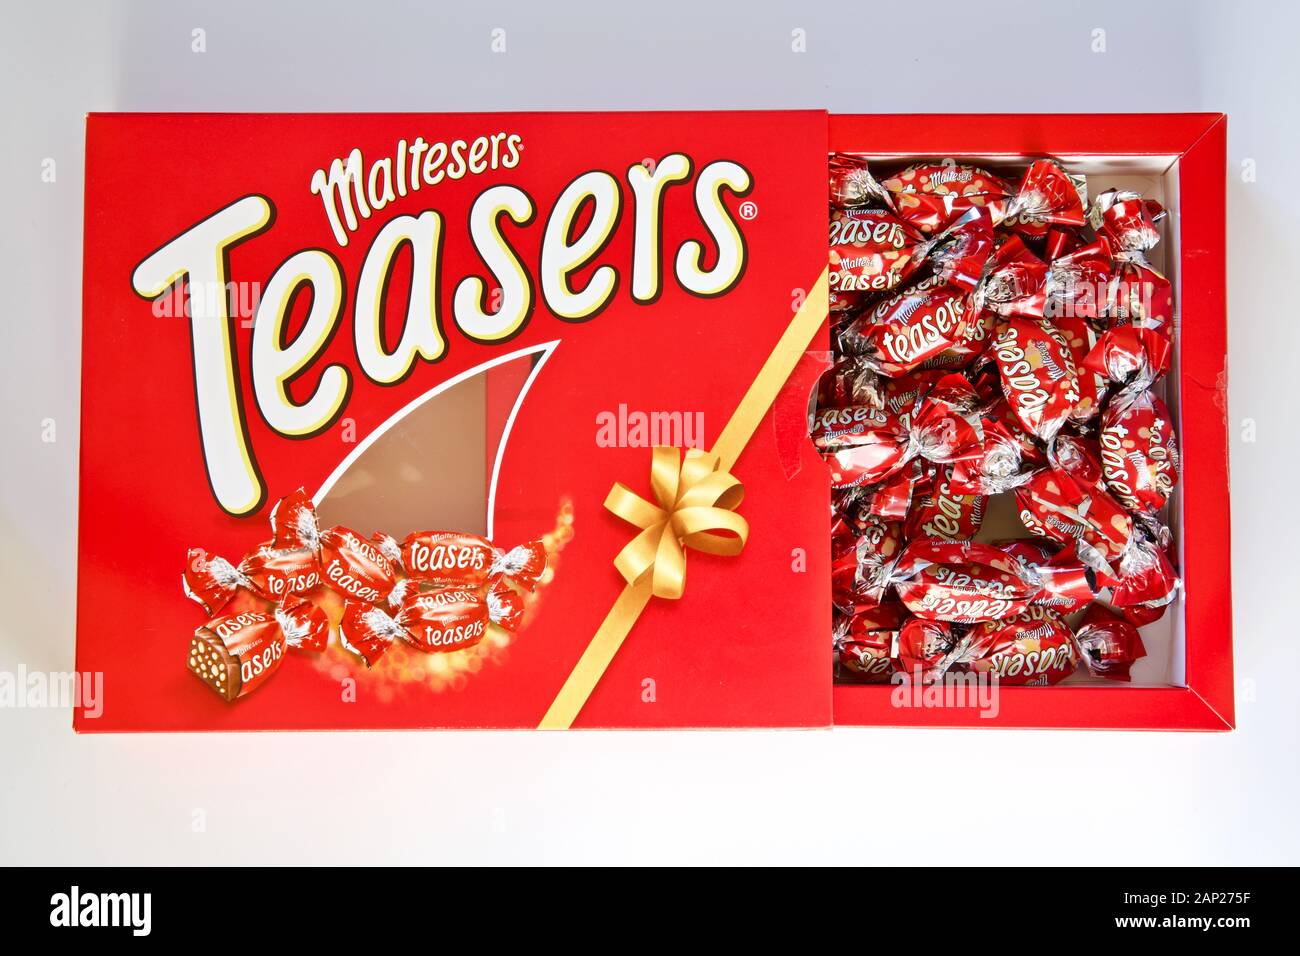 Maltesers Teasers Gift Box Stock Photo - Alamy